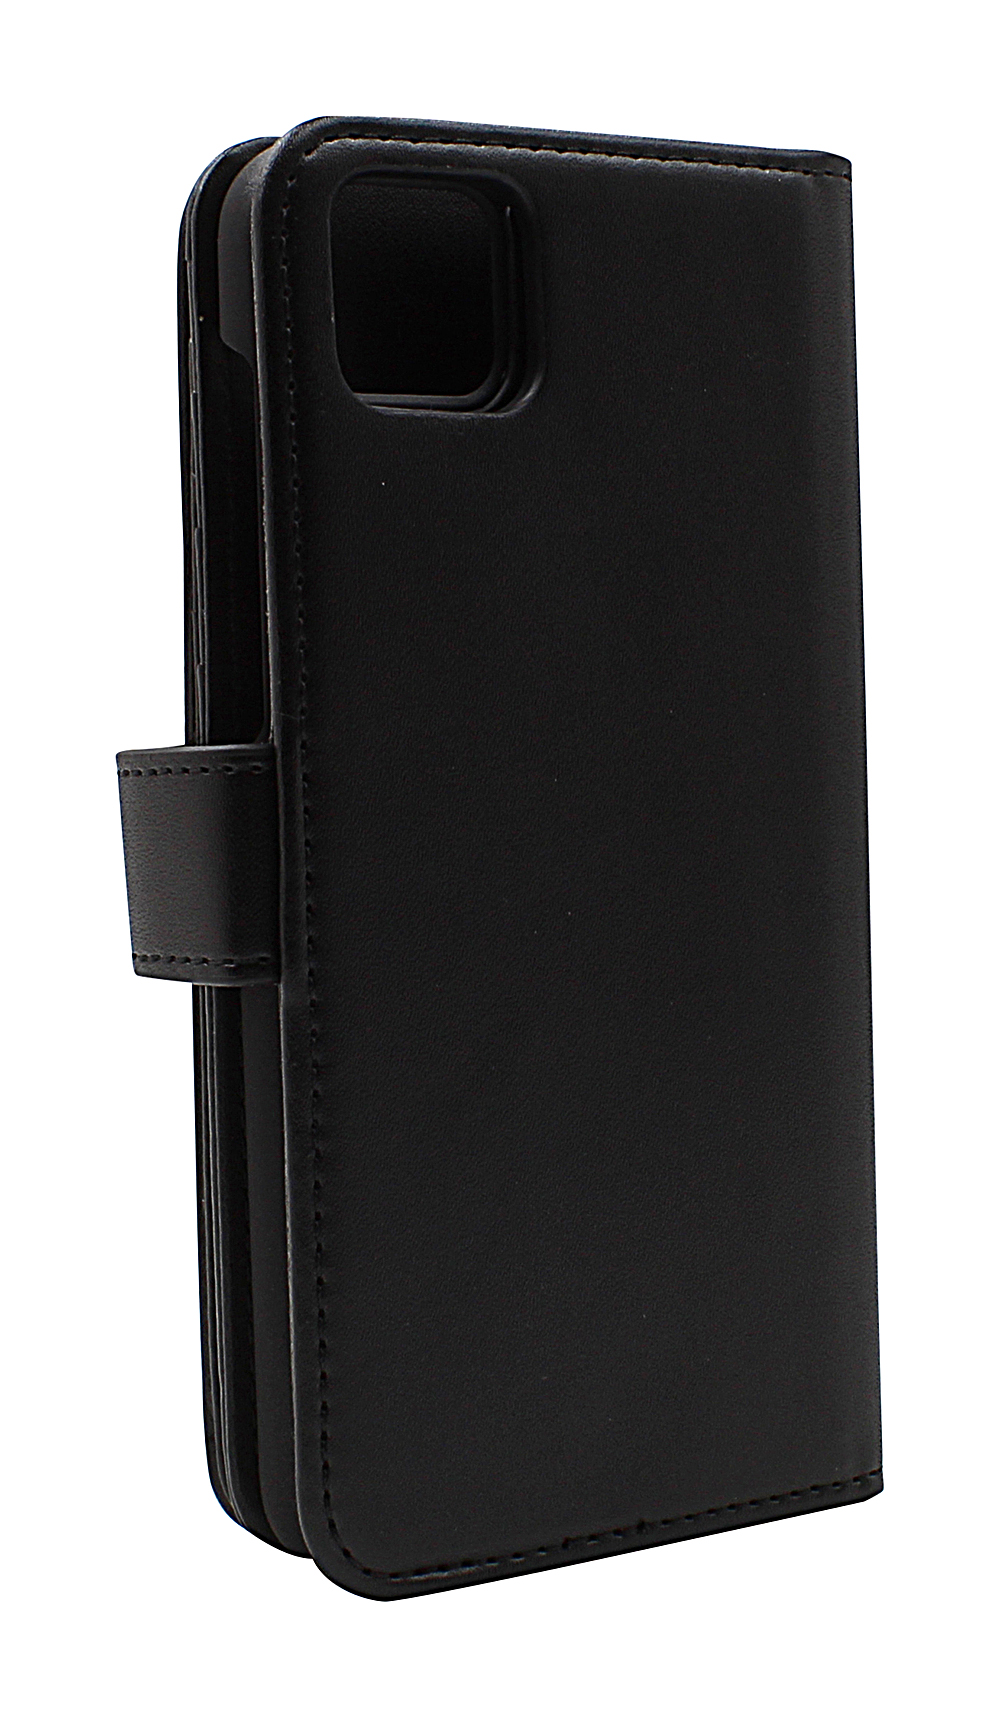 Skimblocker XL Magnet Wallet Huawei Y5p